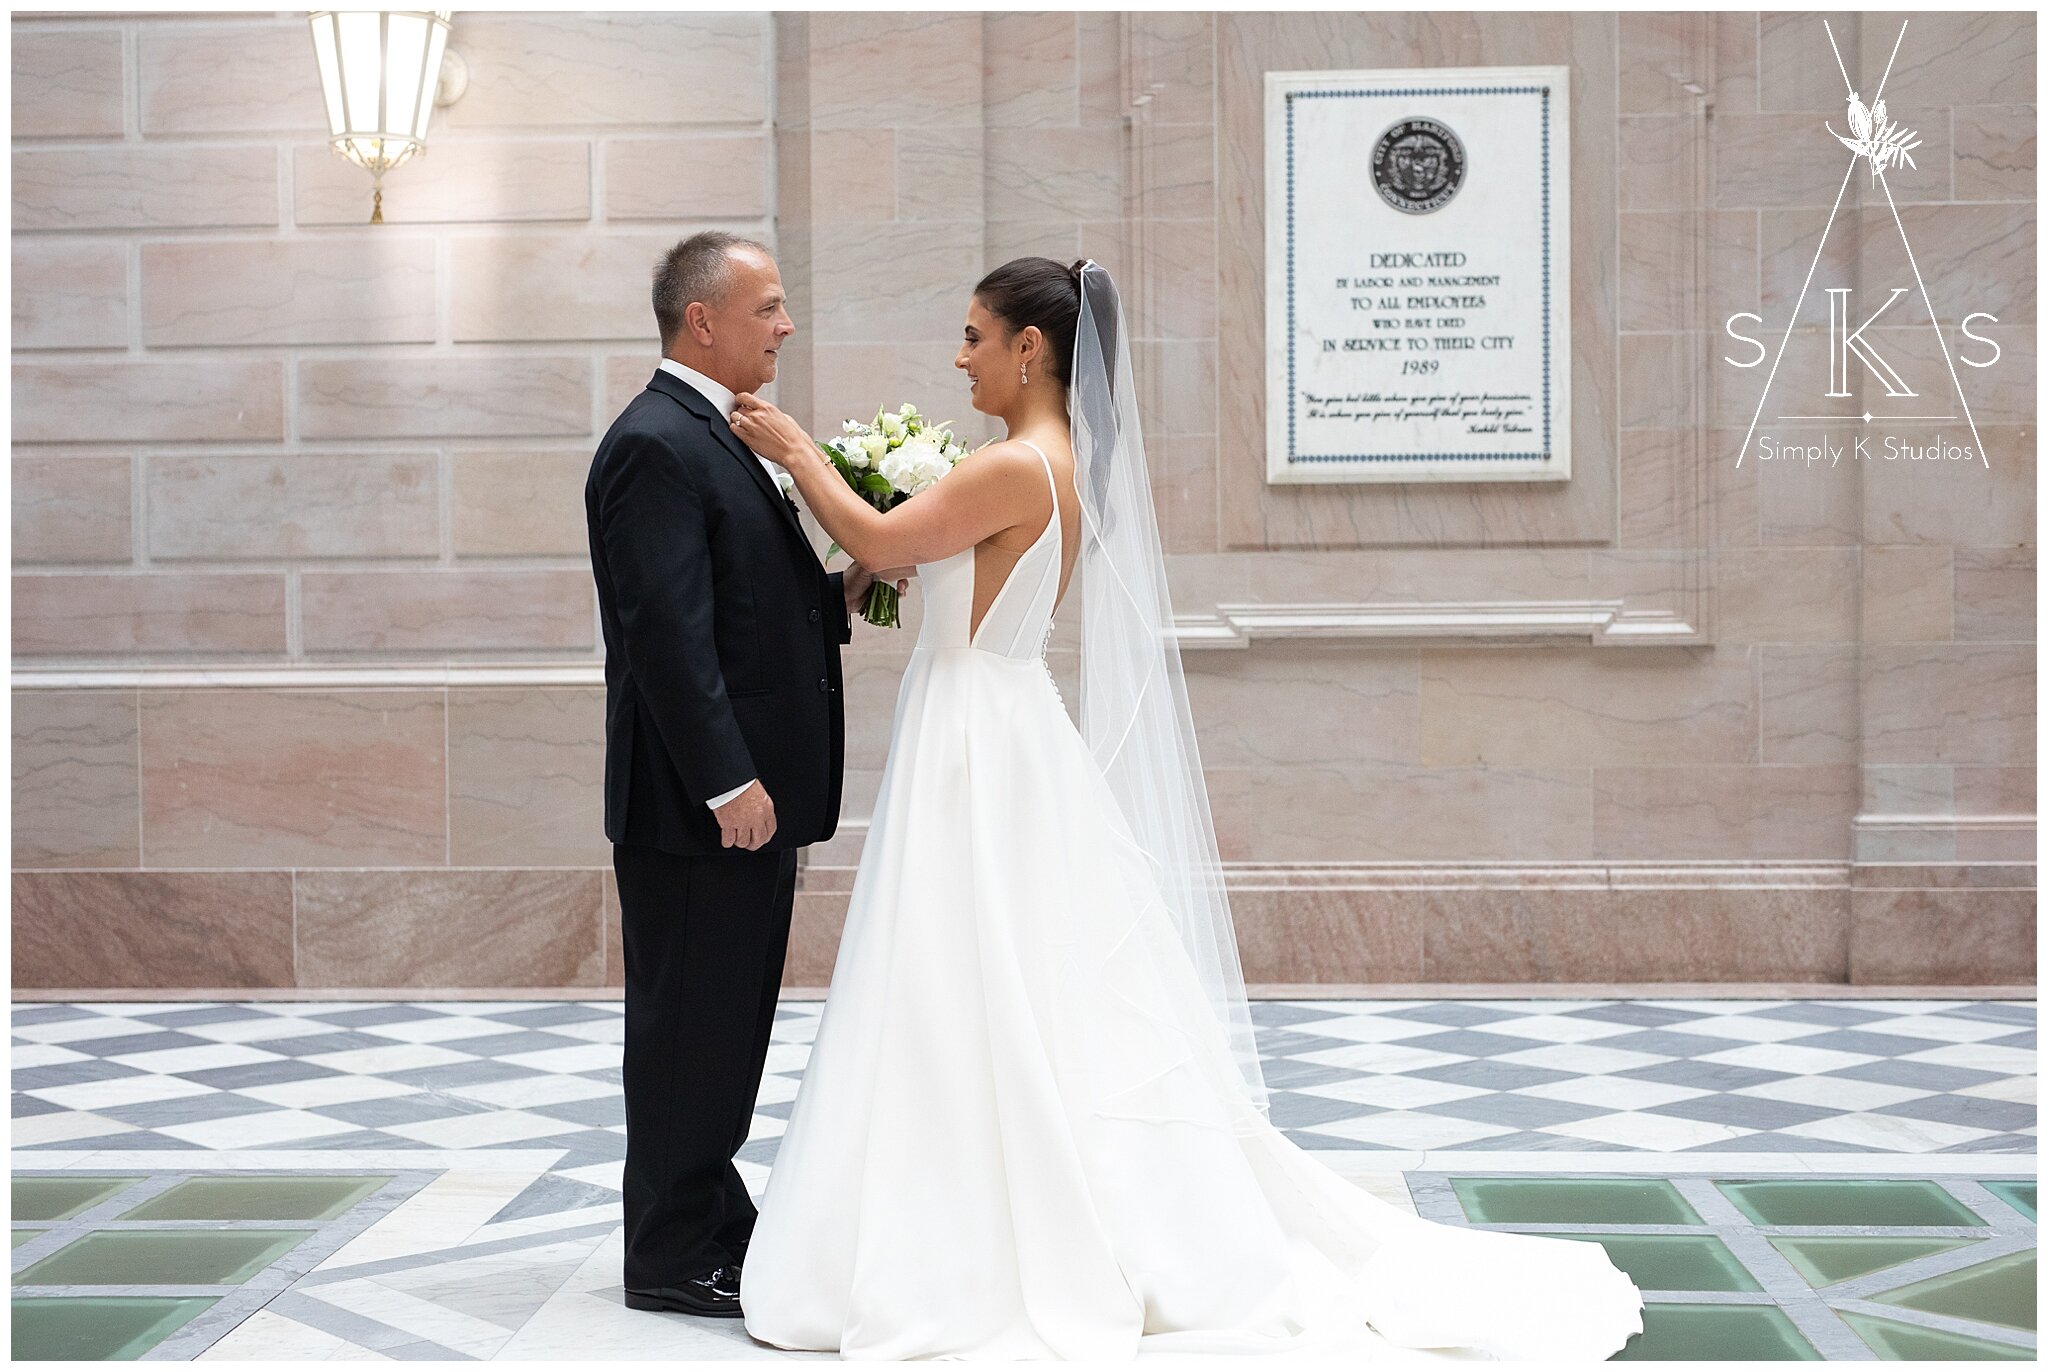 30 Wedding Photos inside City Hall in Hartford.jpg